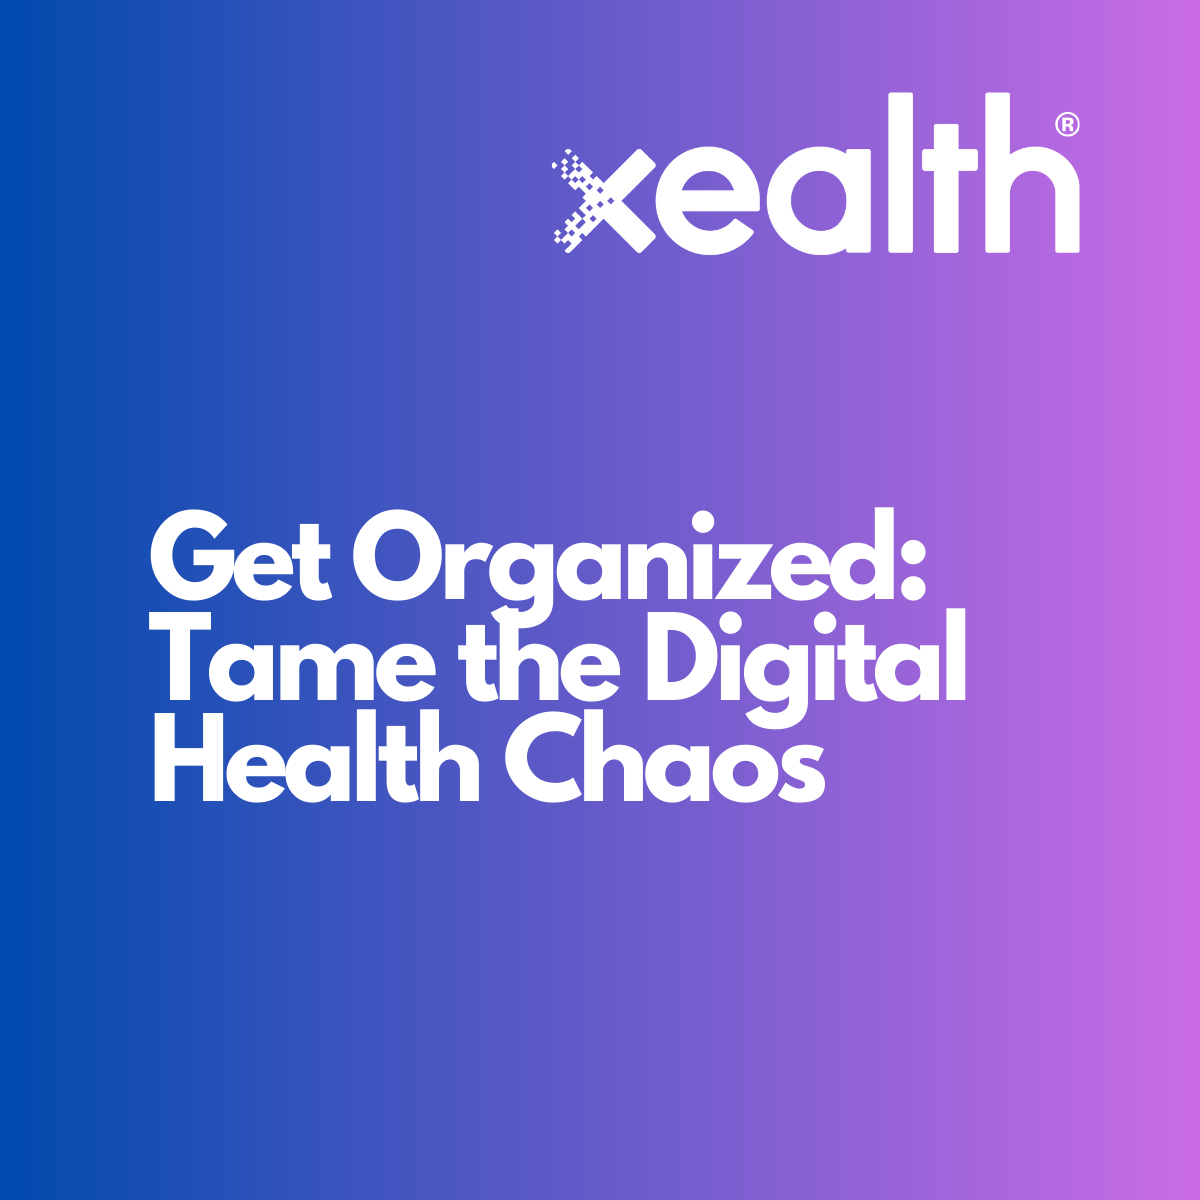 Get Organized: Tame the Digital Health Chaos